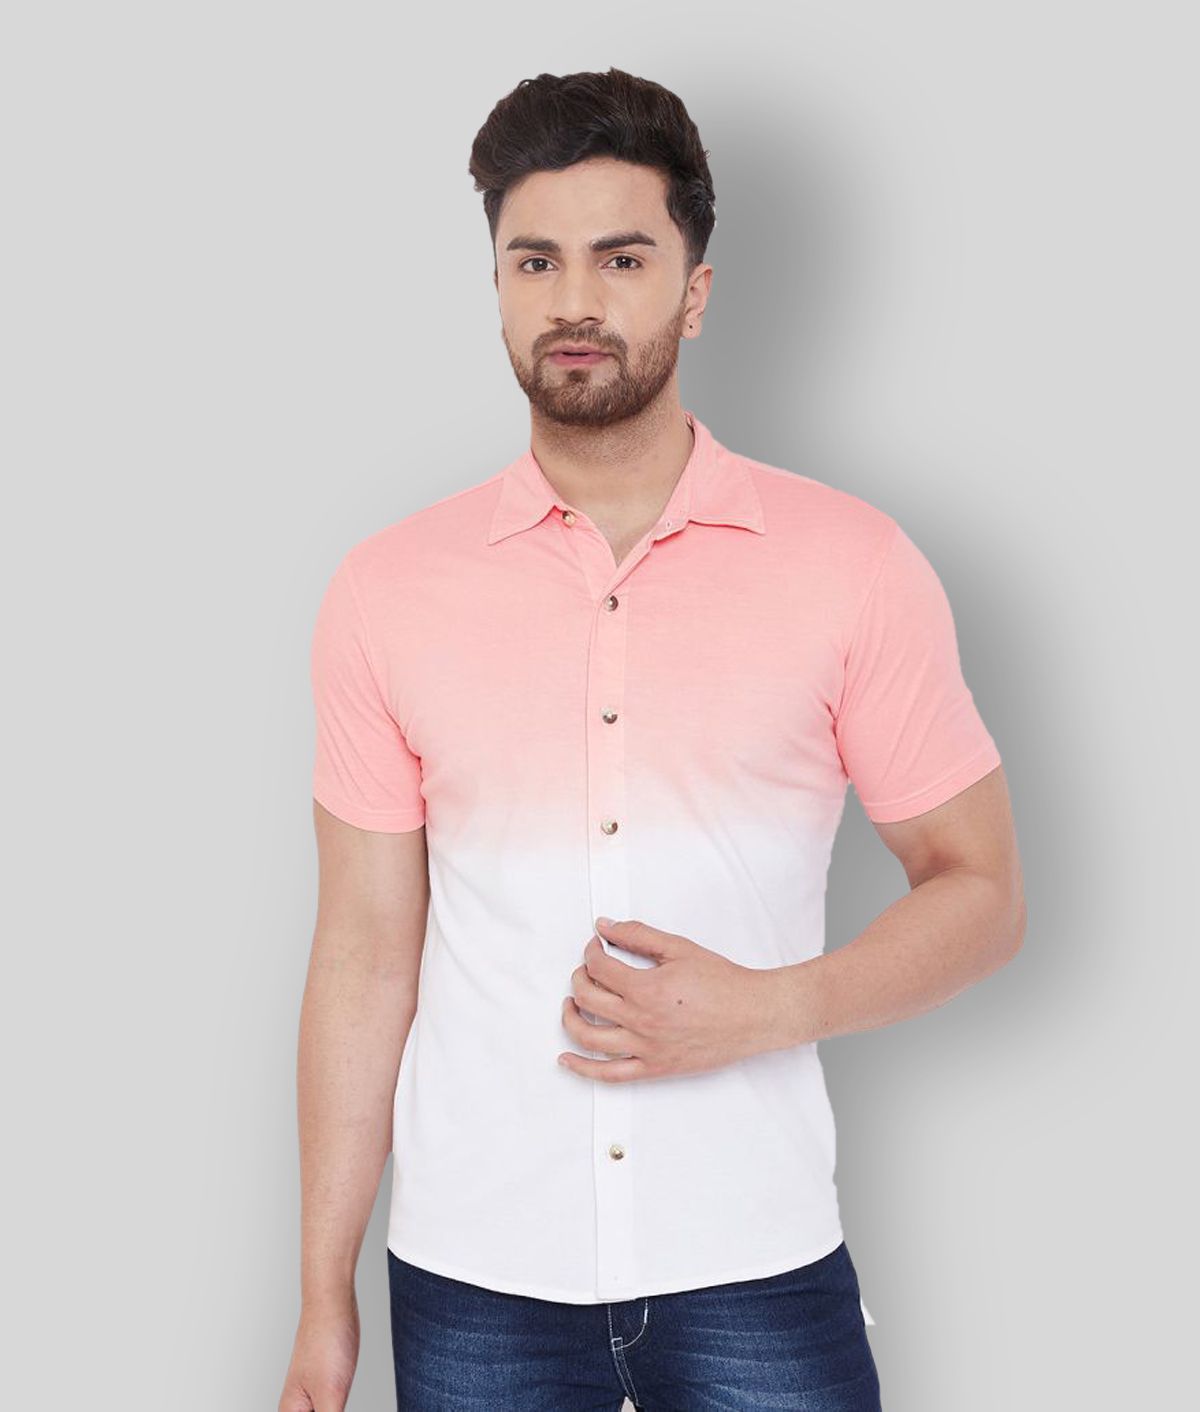     			Gritstones - Multicolor Cotton Blend Regular Fit Men's Casual Shirt (Pack of 1)